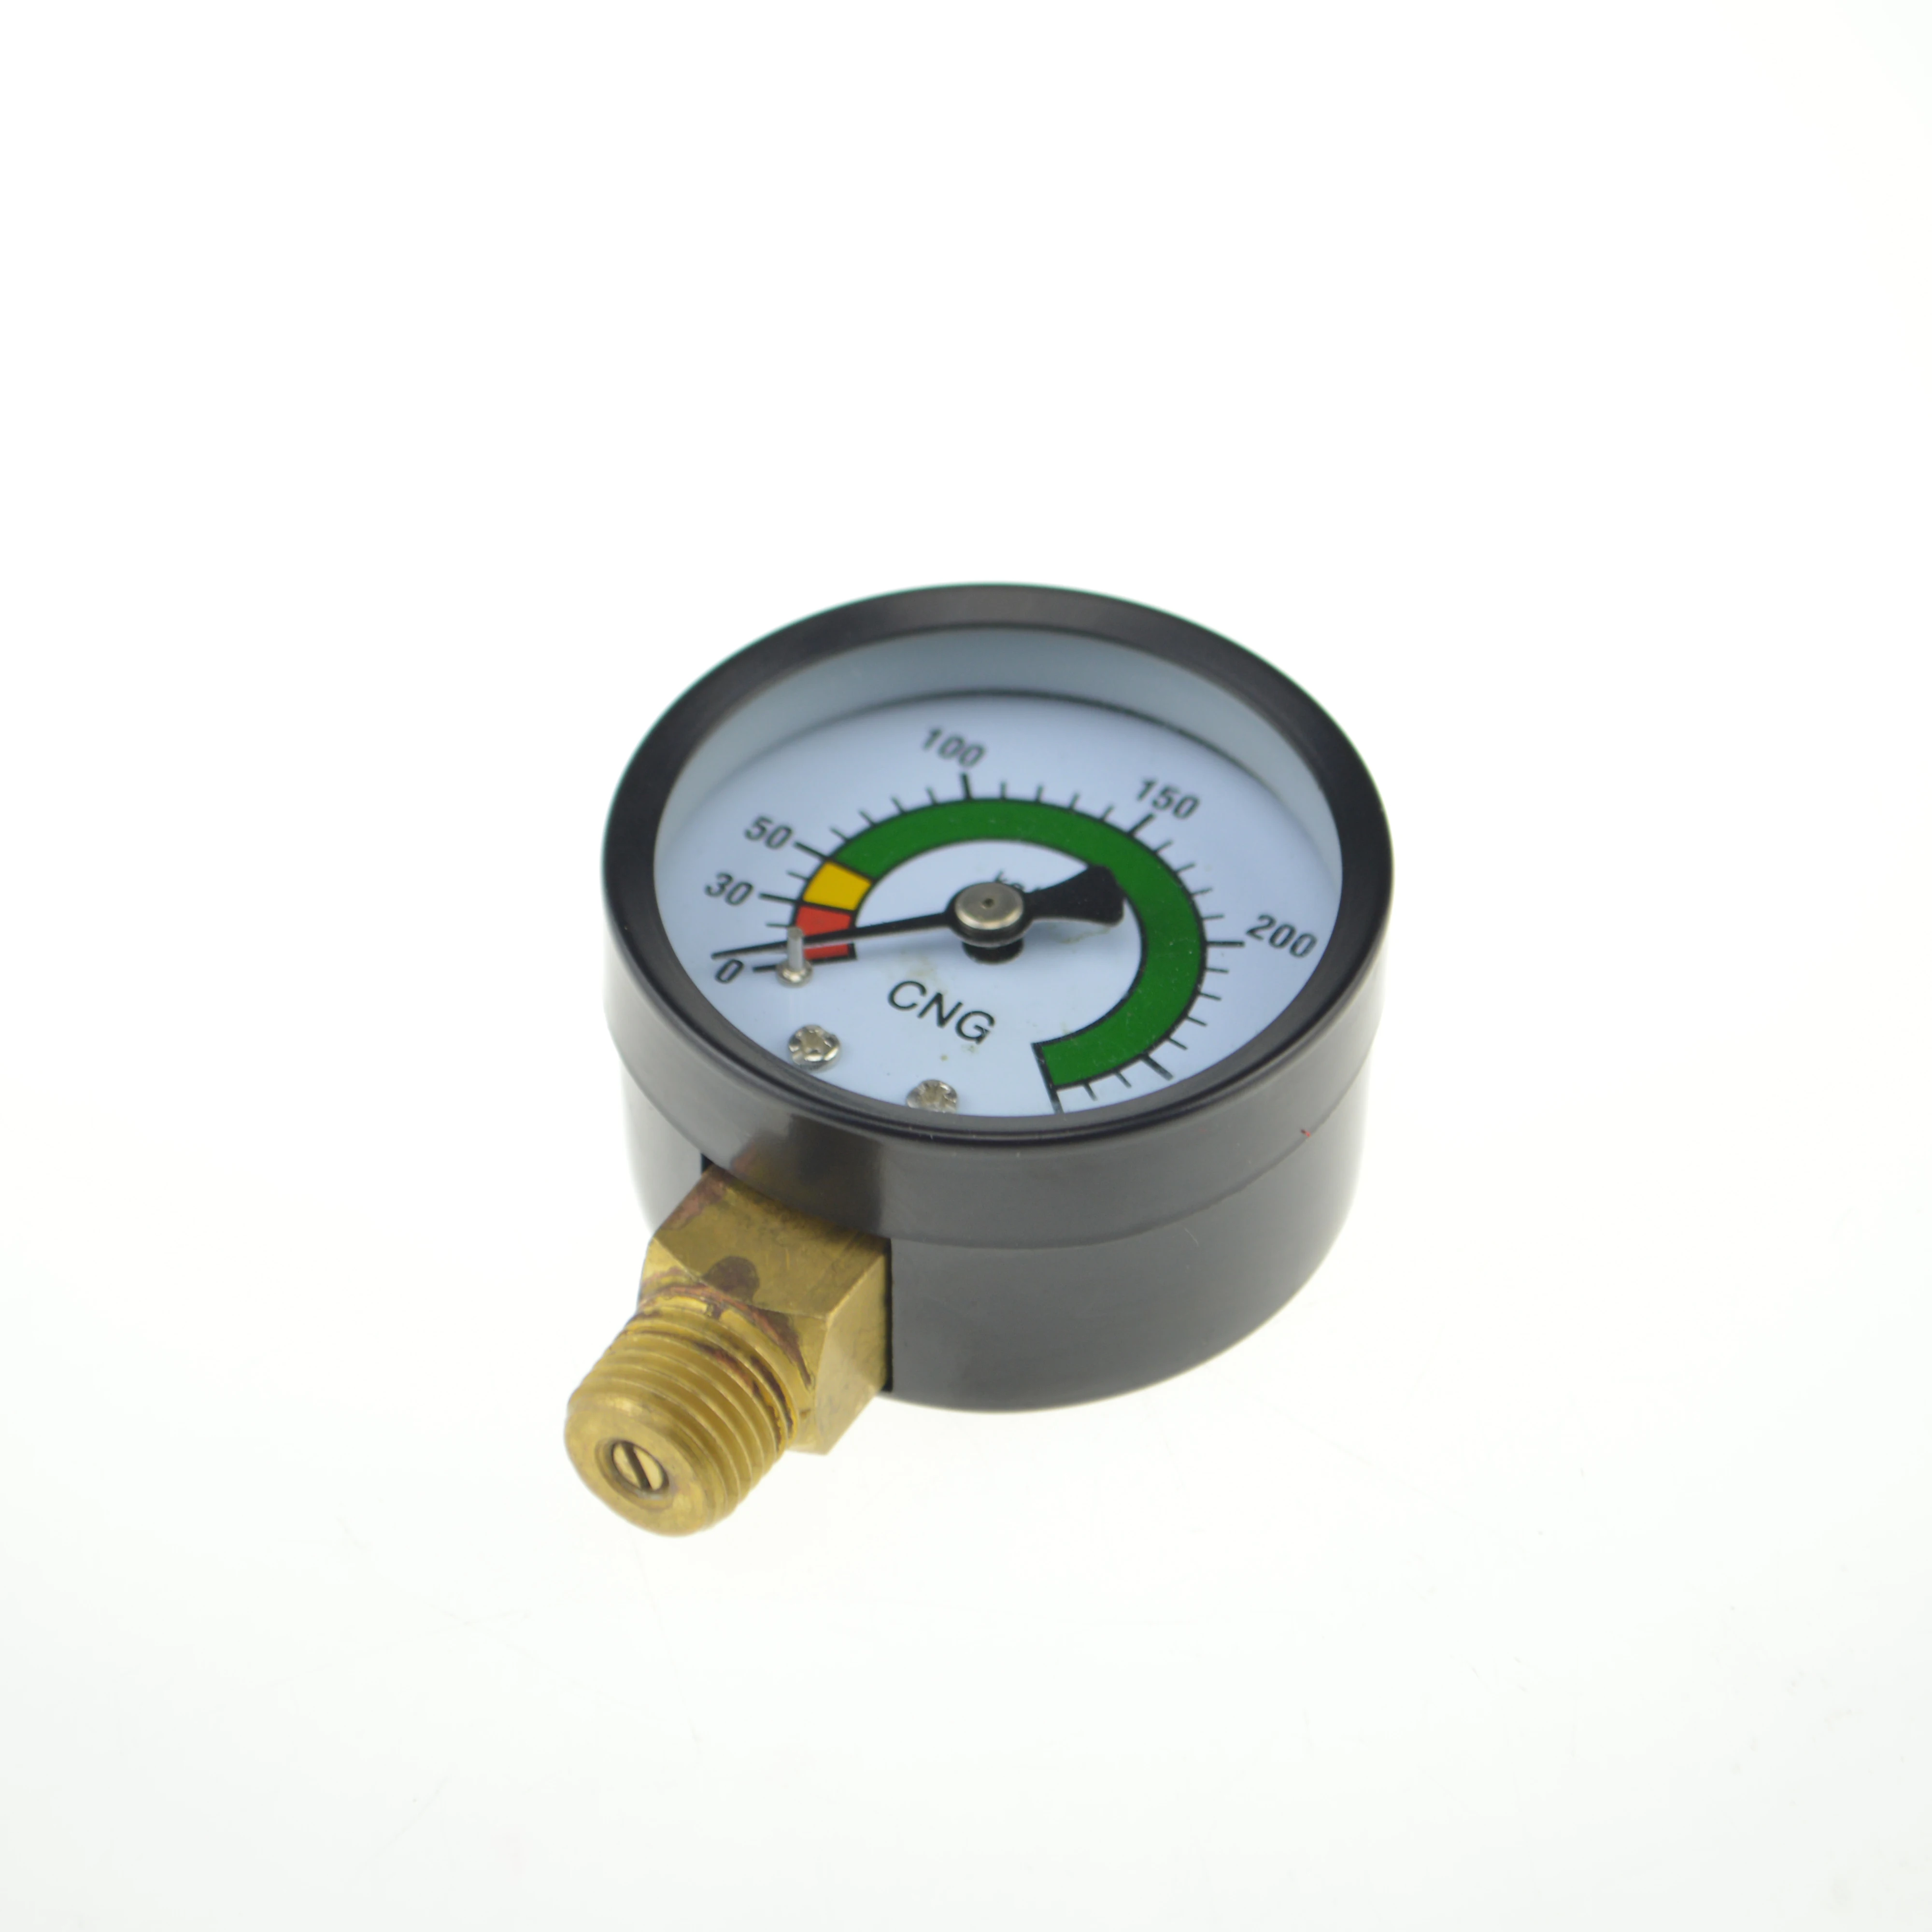 JVTIA high quality pressure gauge manufacturer for temperature measurement and control-4